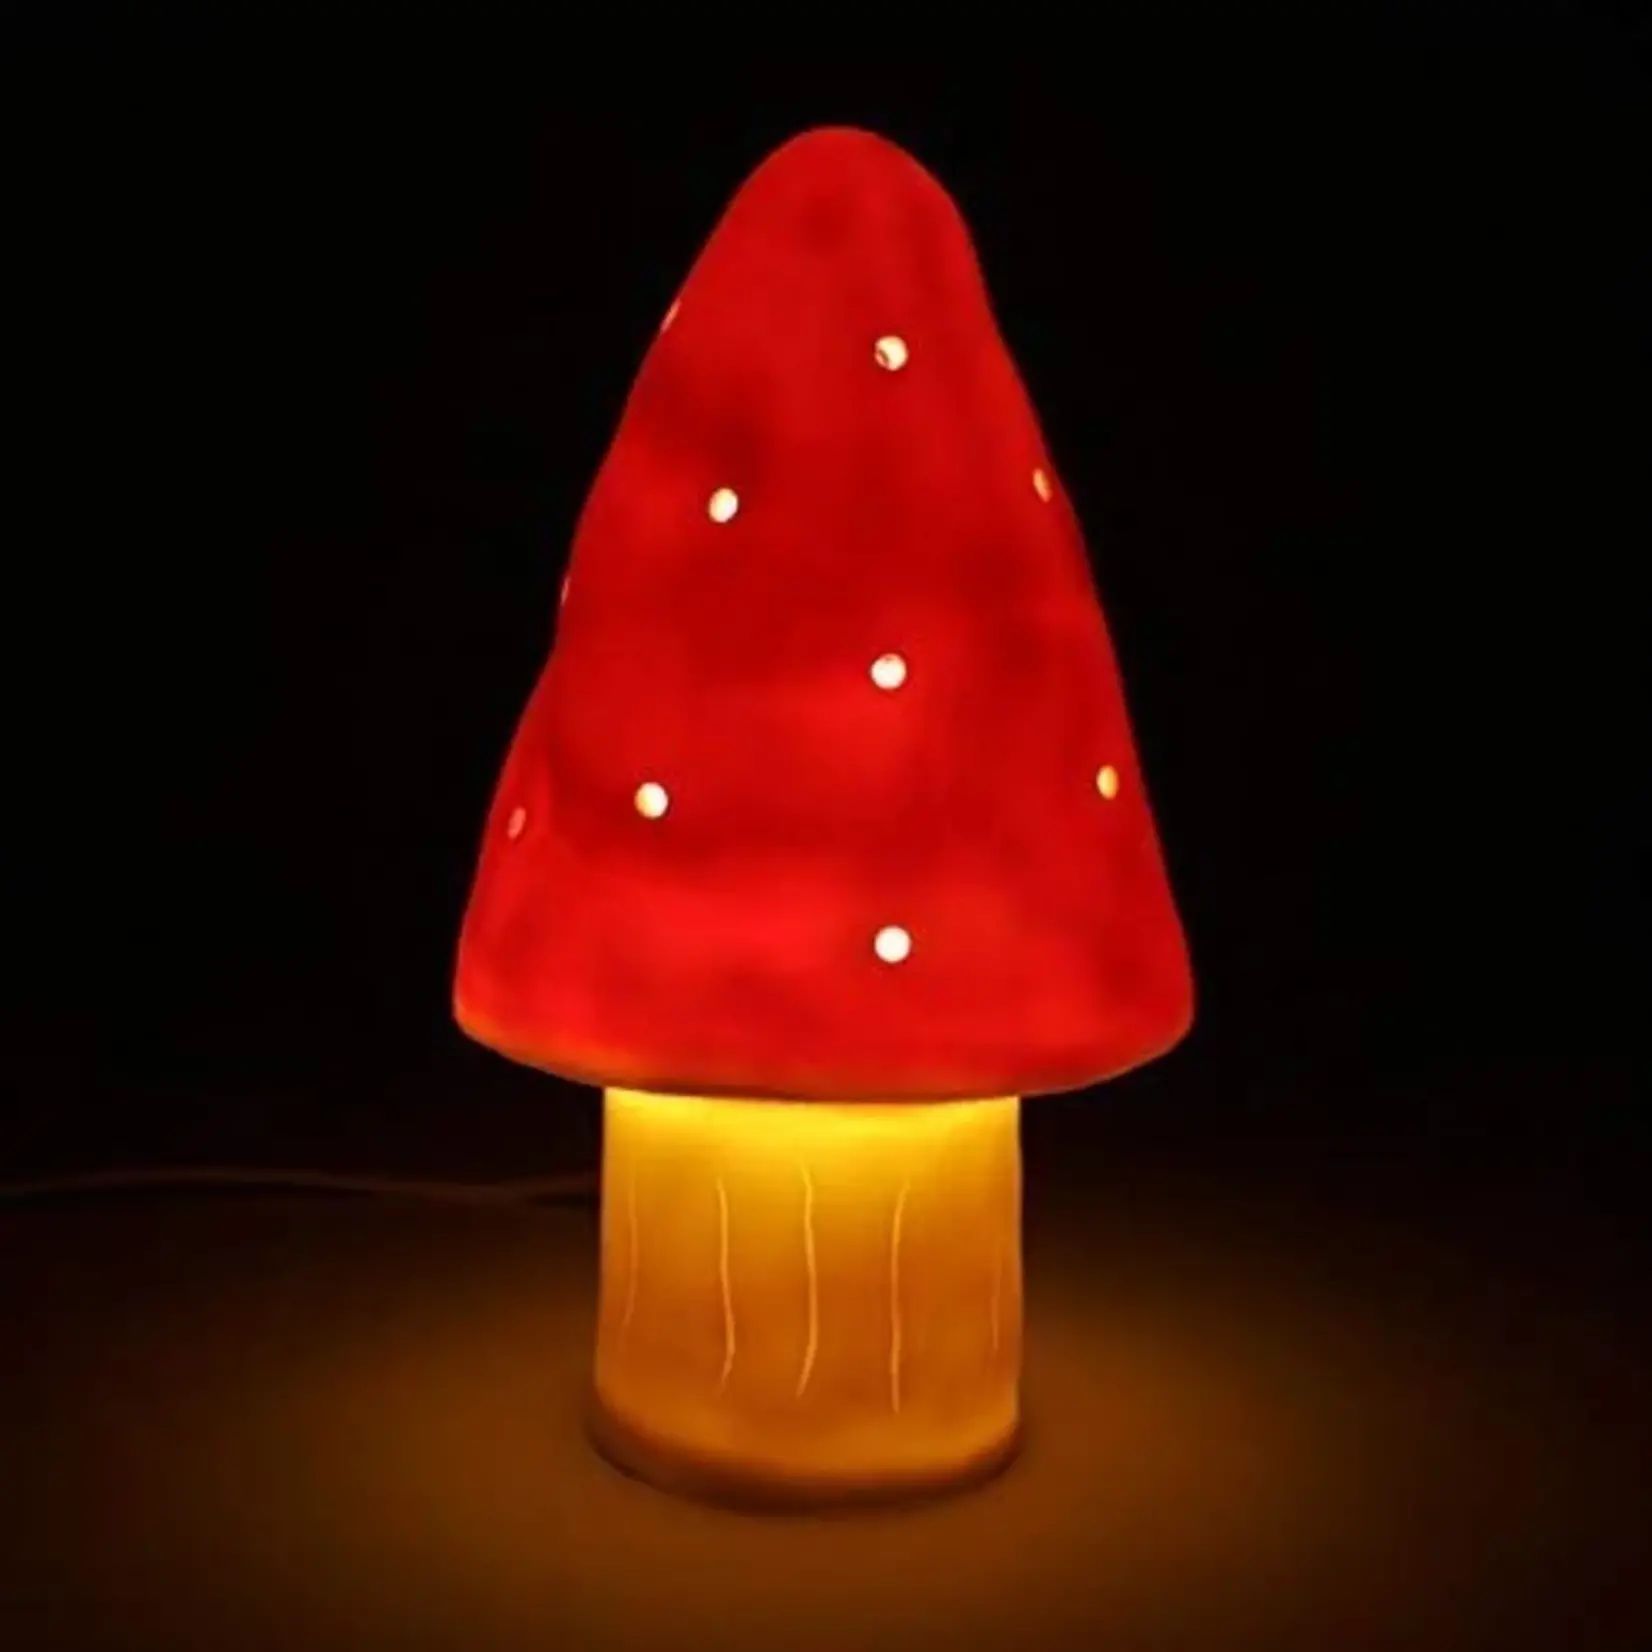 EGMONT SMALL MUSHROOM RED LAMP W/ PLUG